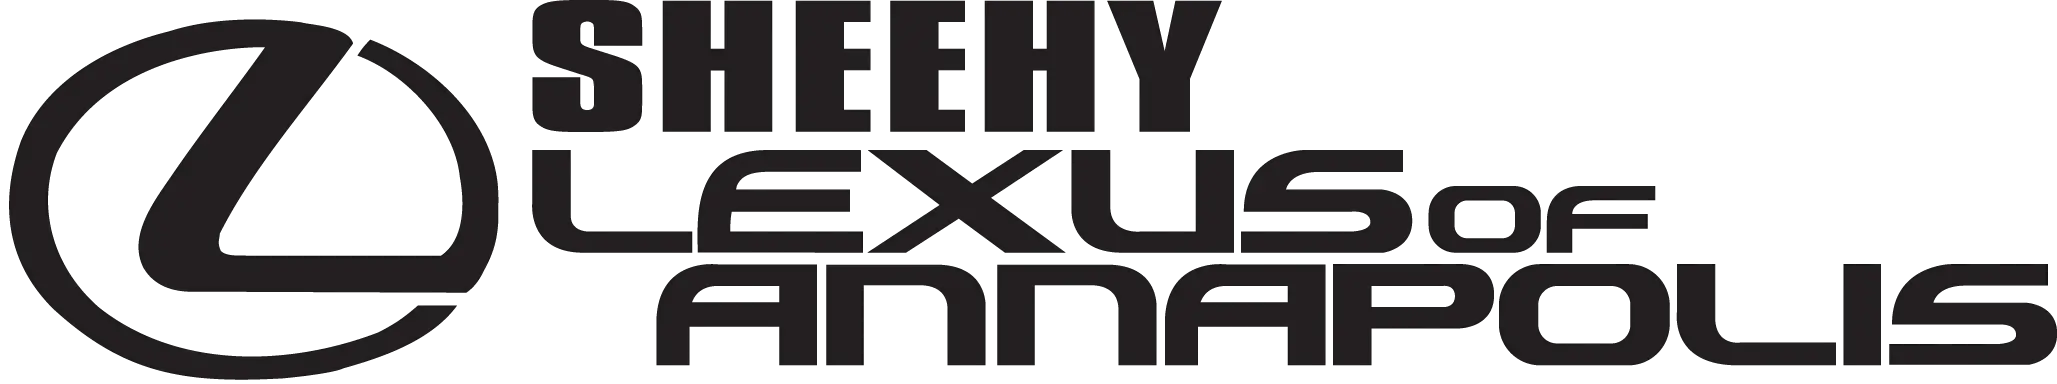 SHEEHY-LEXUS-Logo-Final-2012